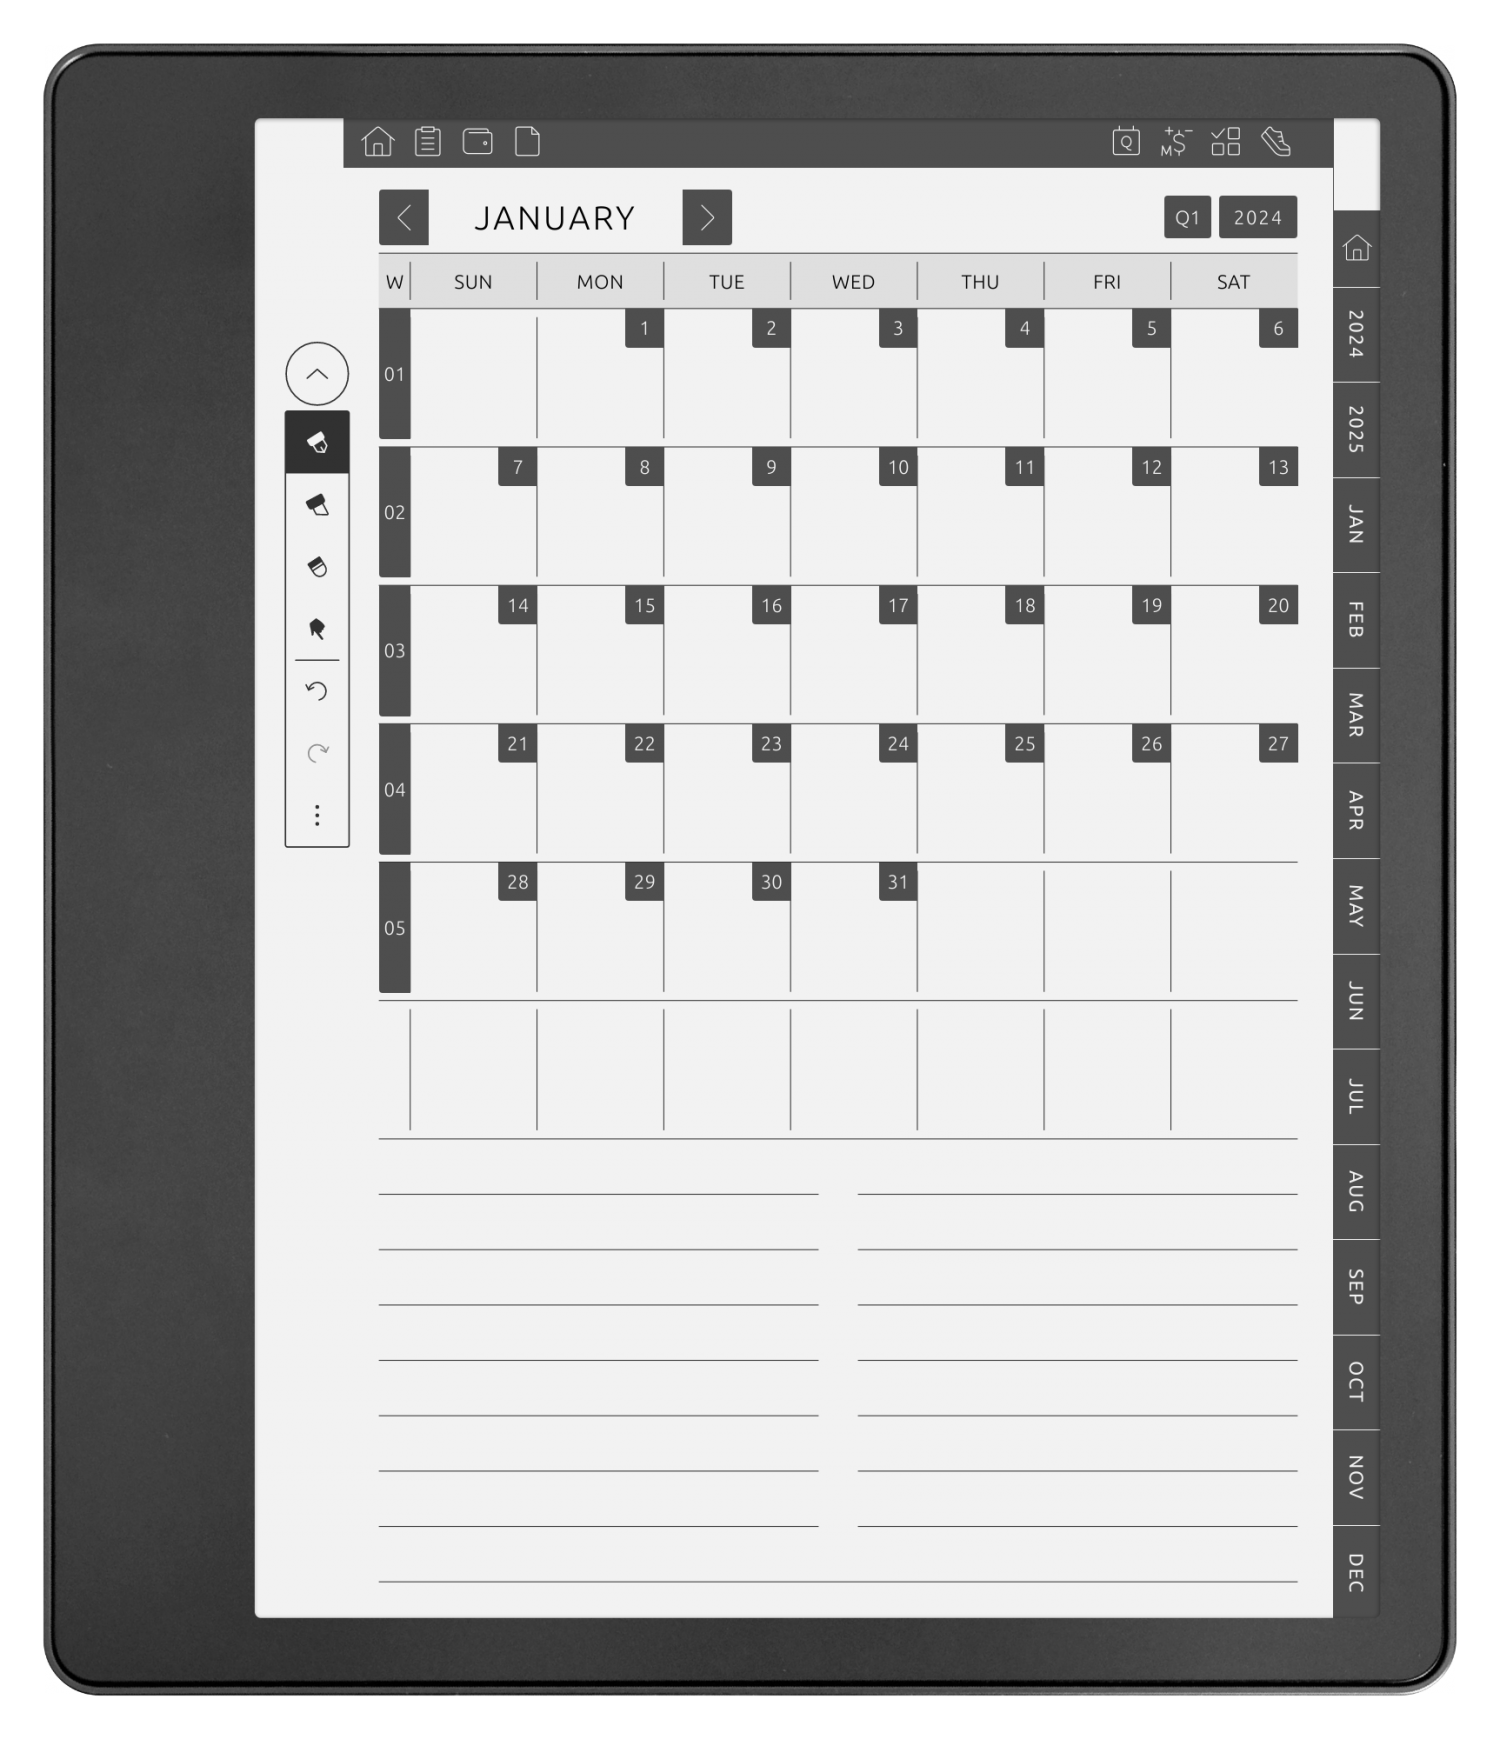 Kindle Scribe Monthly Calendar (5 years) yy - yy+5 - Portrait Original Theme